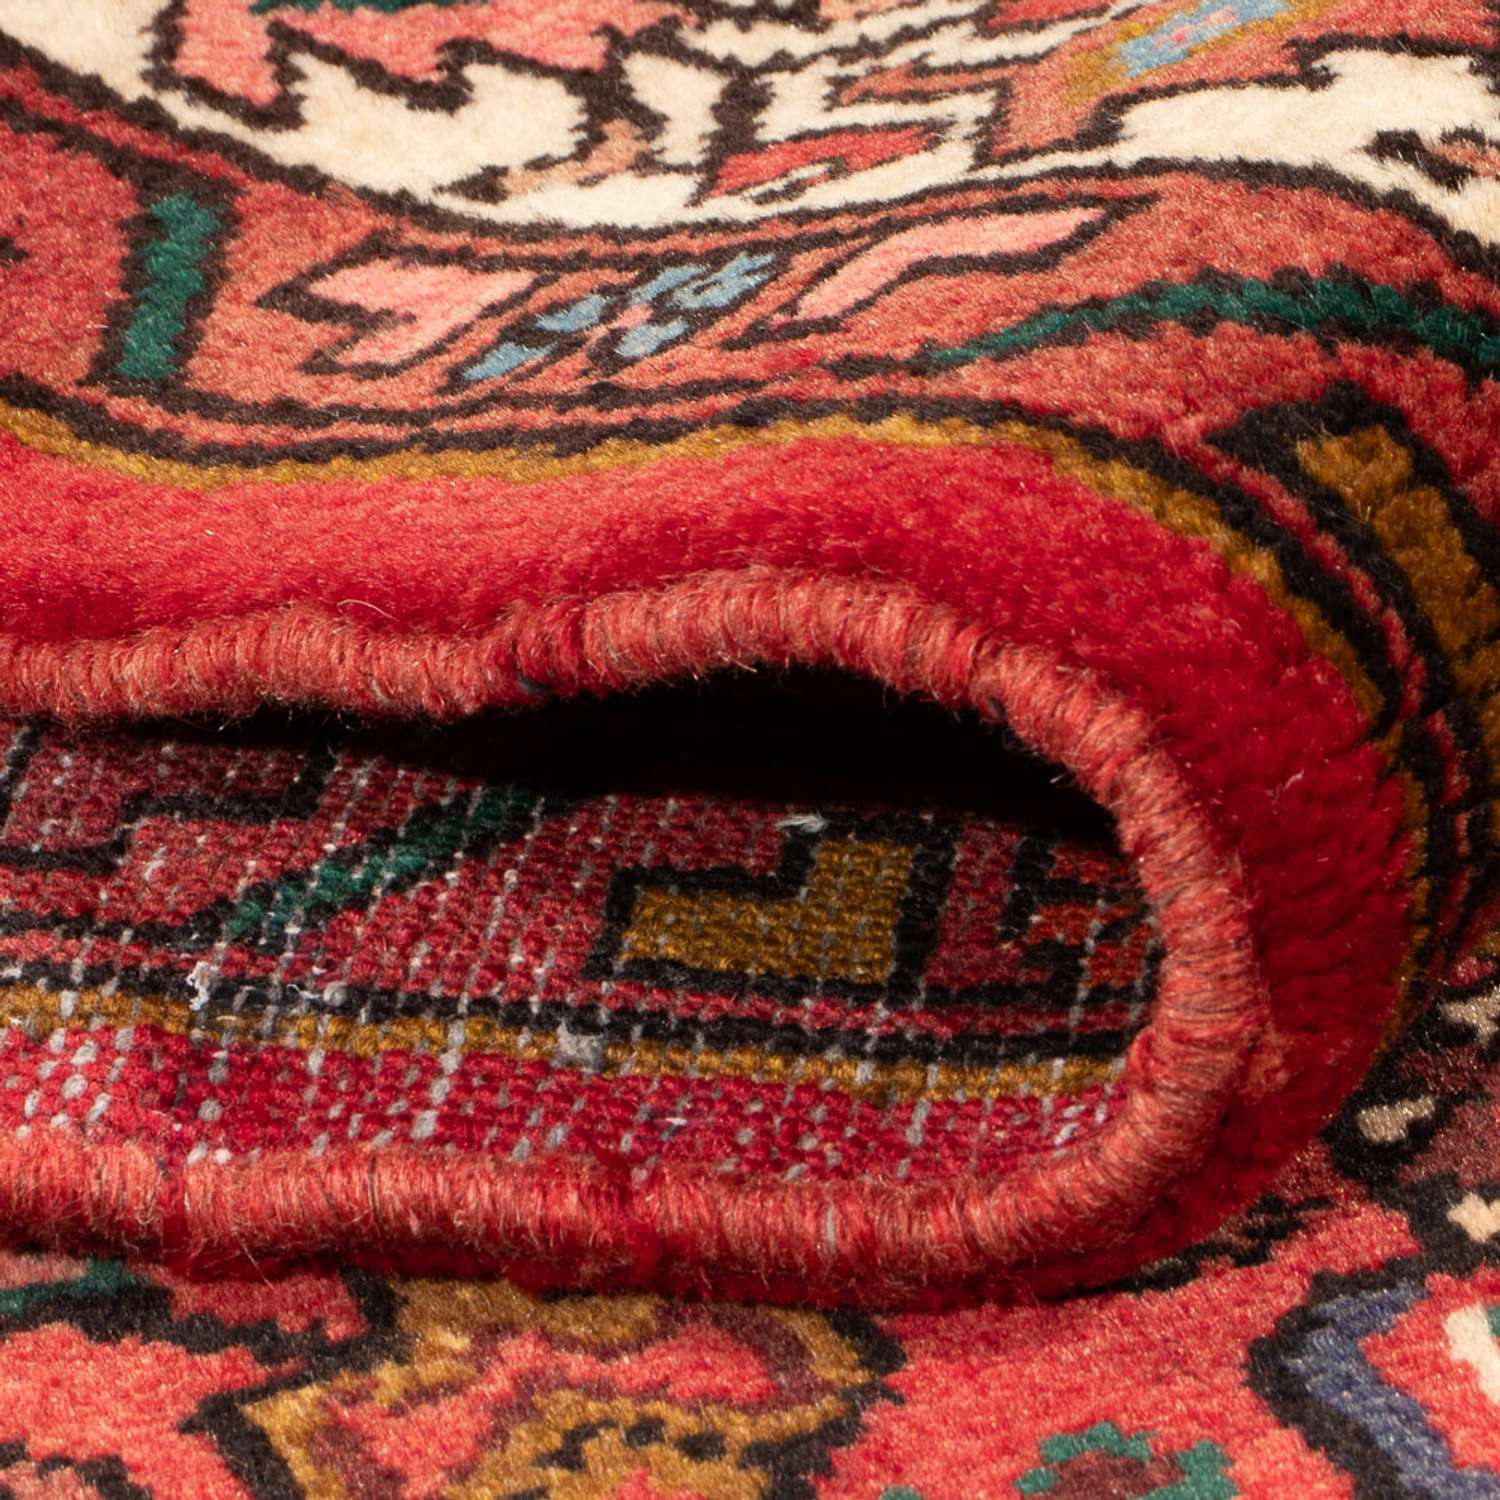 Persisk matta - Nomadic - 214 x 150 cm - röd